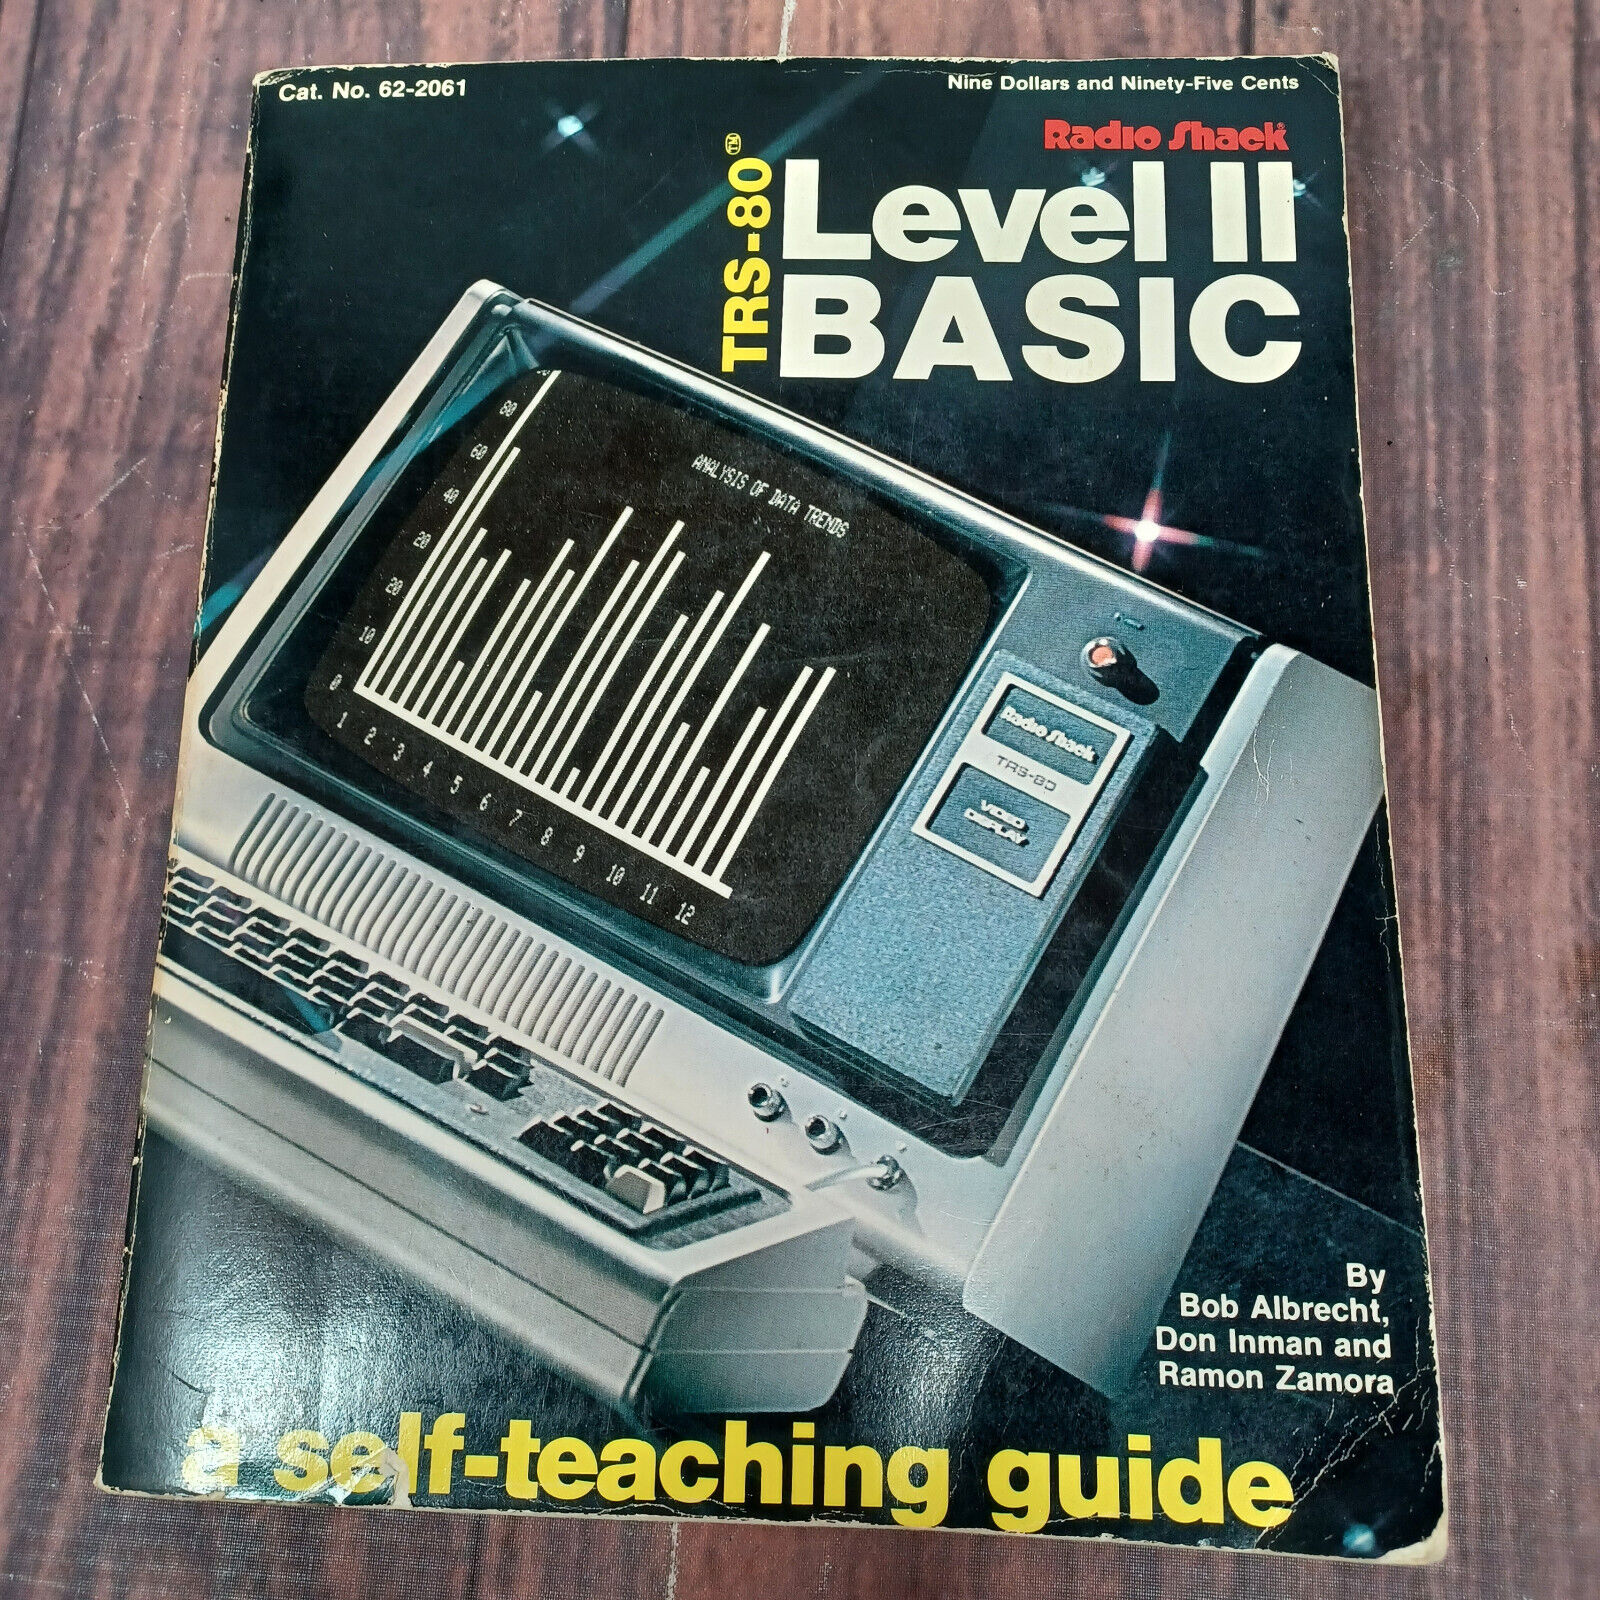 TRS-80 Level II BASIC (Radio Shack) Self-Teaching Guide 62-2061 Vintage Computer